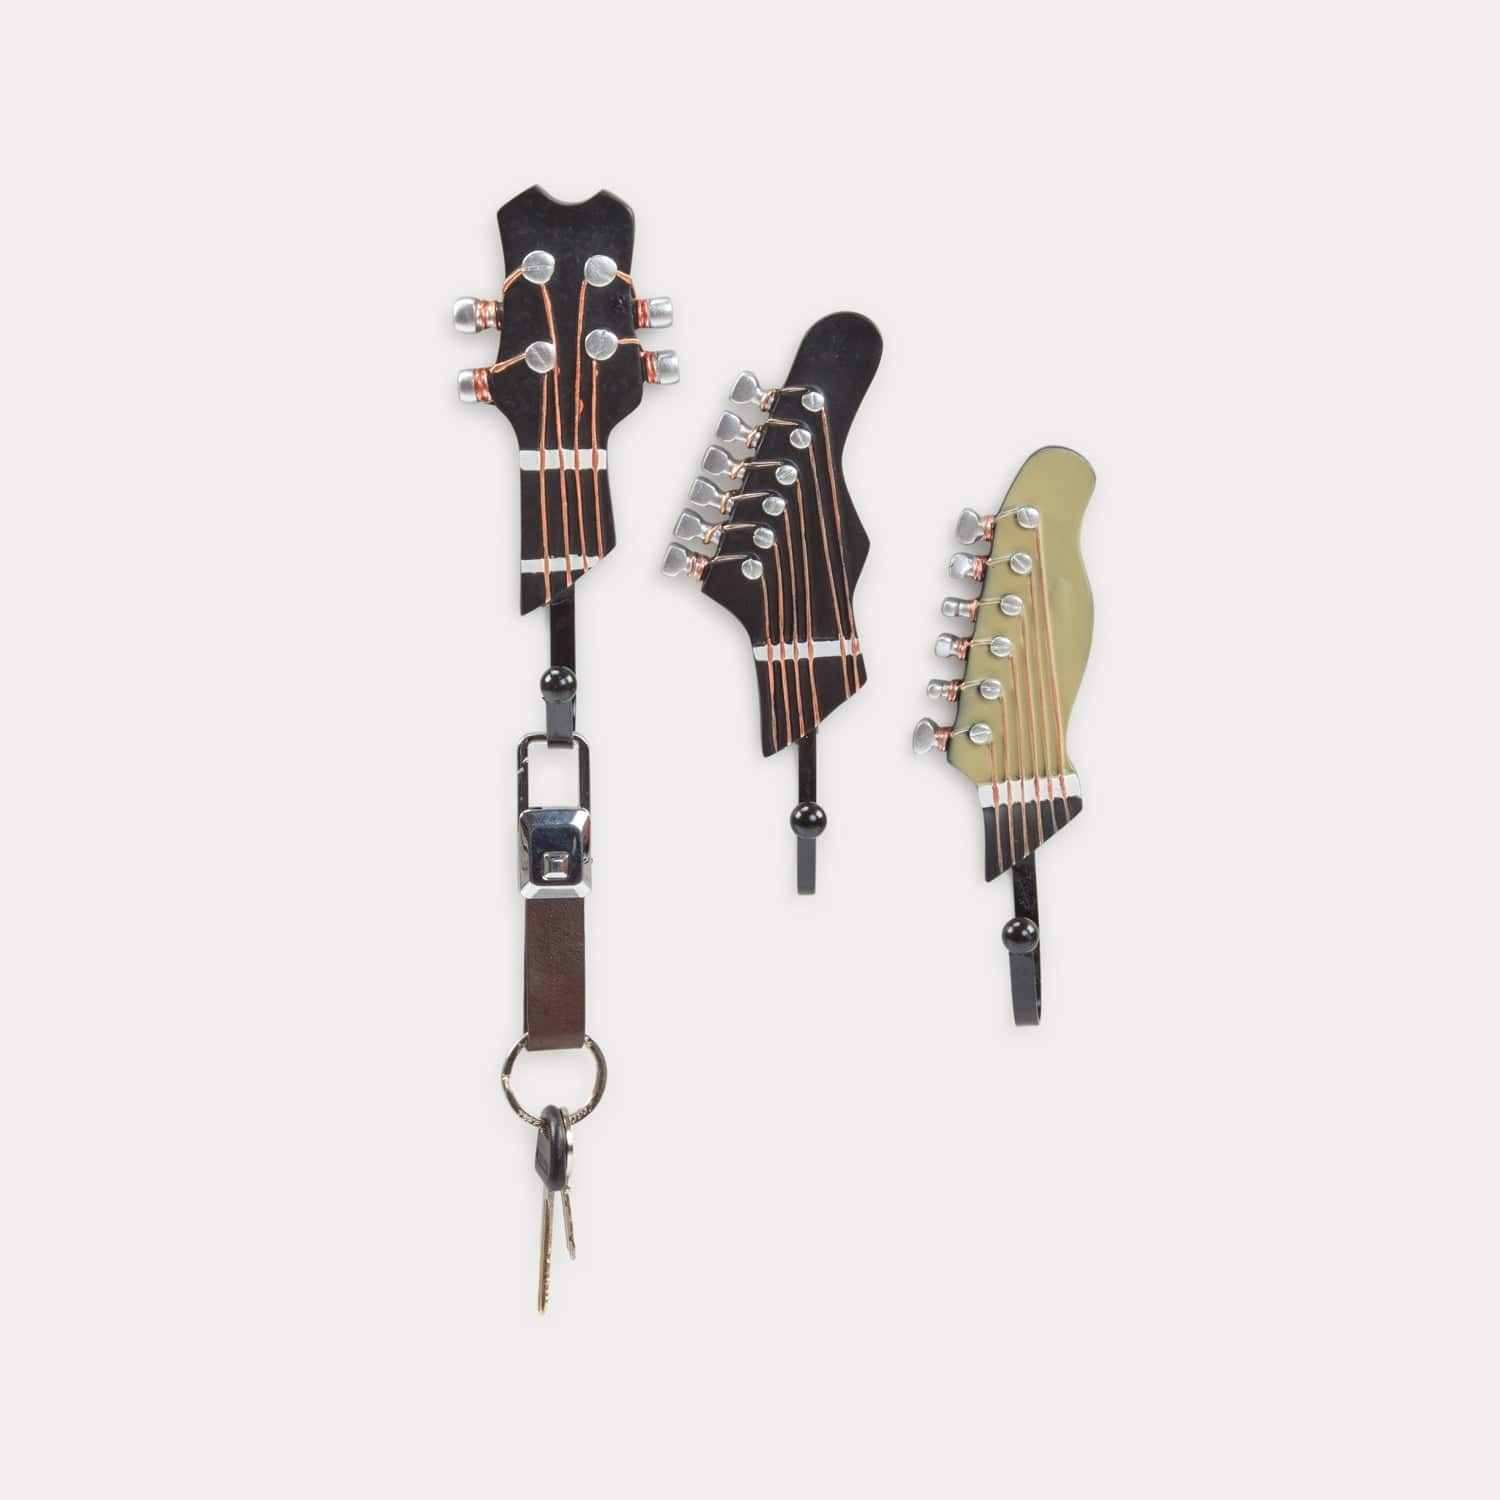 Red Butler Key Holder Key Holder - Guiter DKKH00R08Y18A1 KKH08A1 Guitar Headstock Key Holders – Stylish Storage with Musical Vibes Redbutler